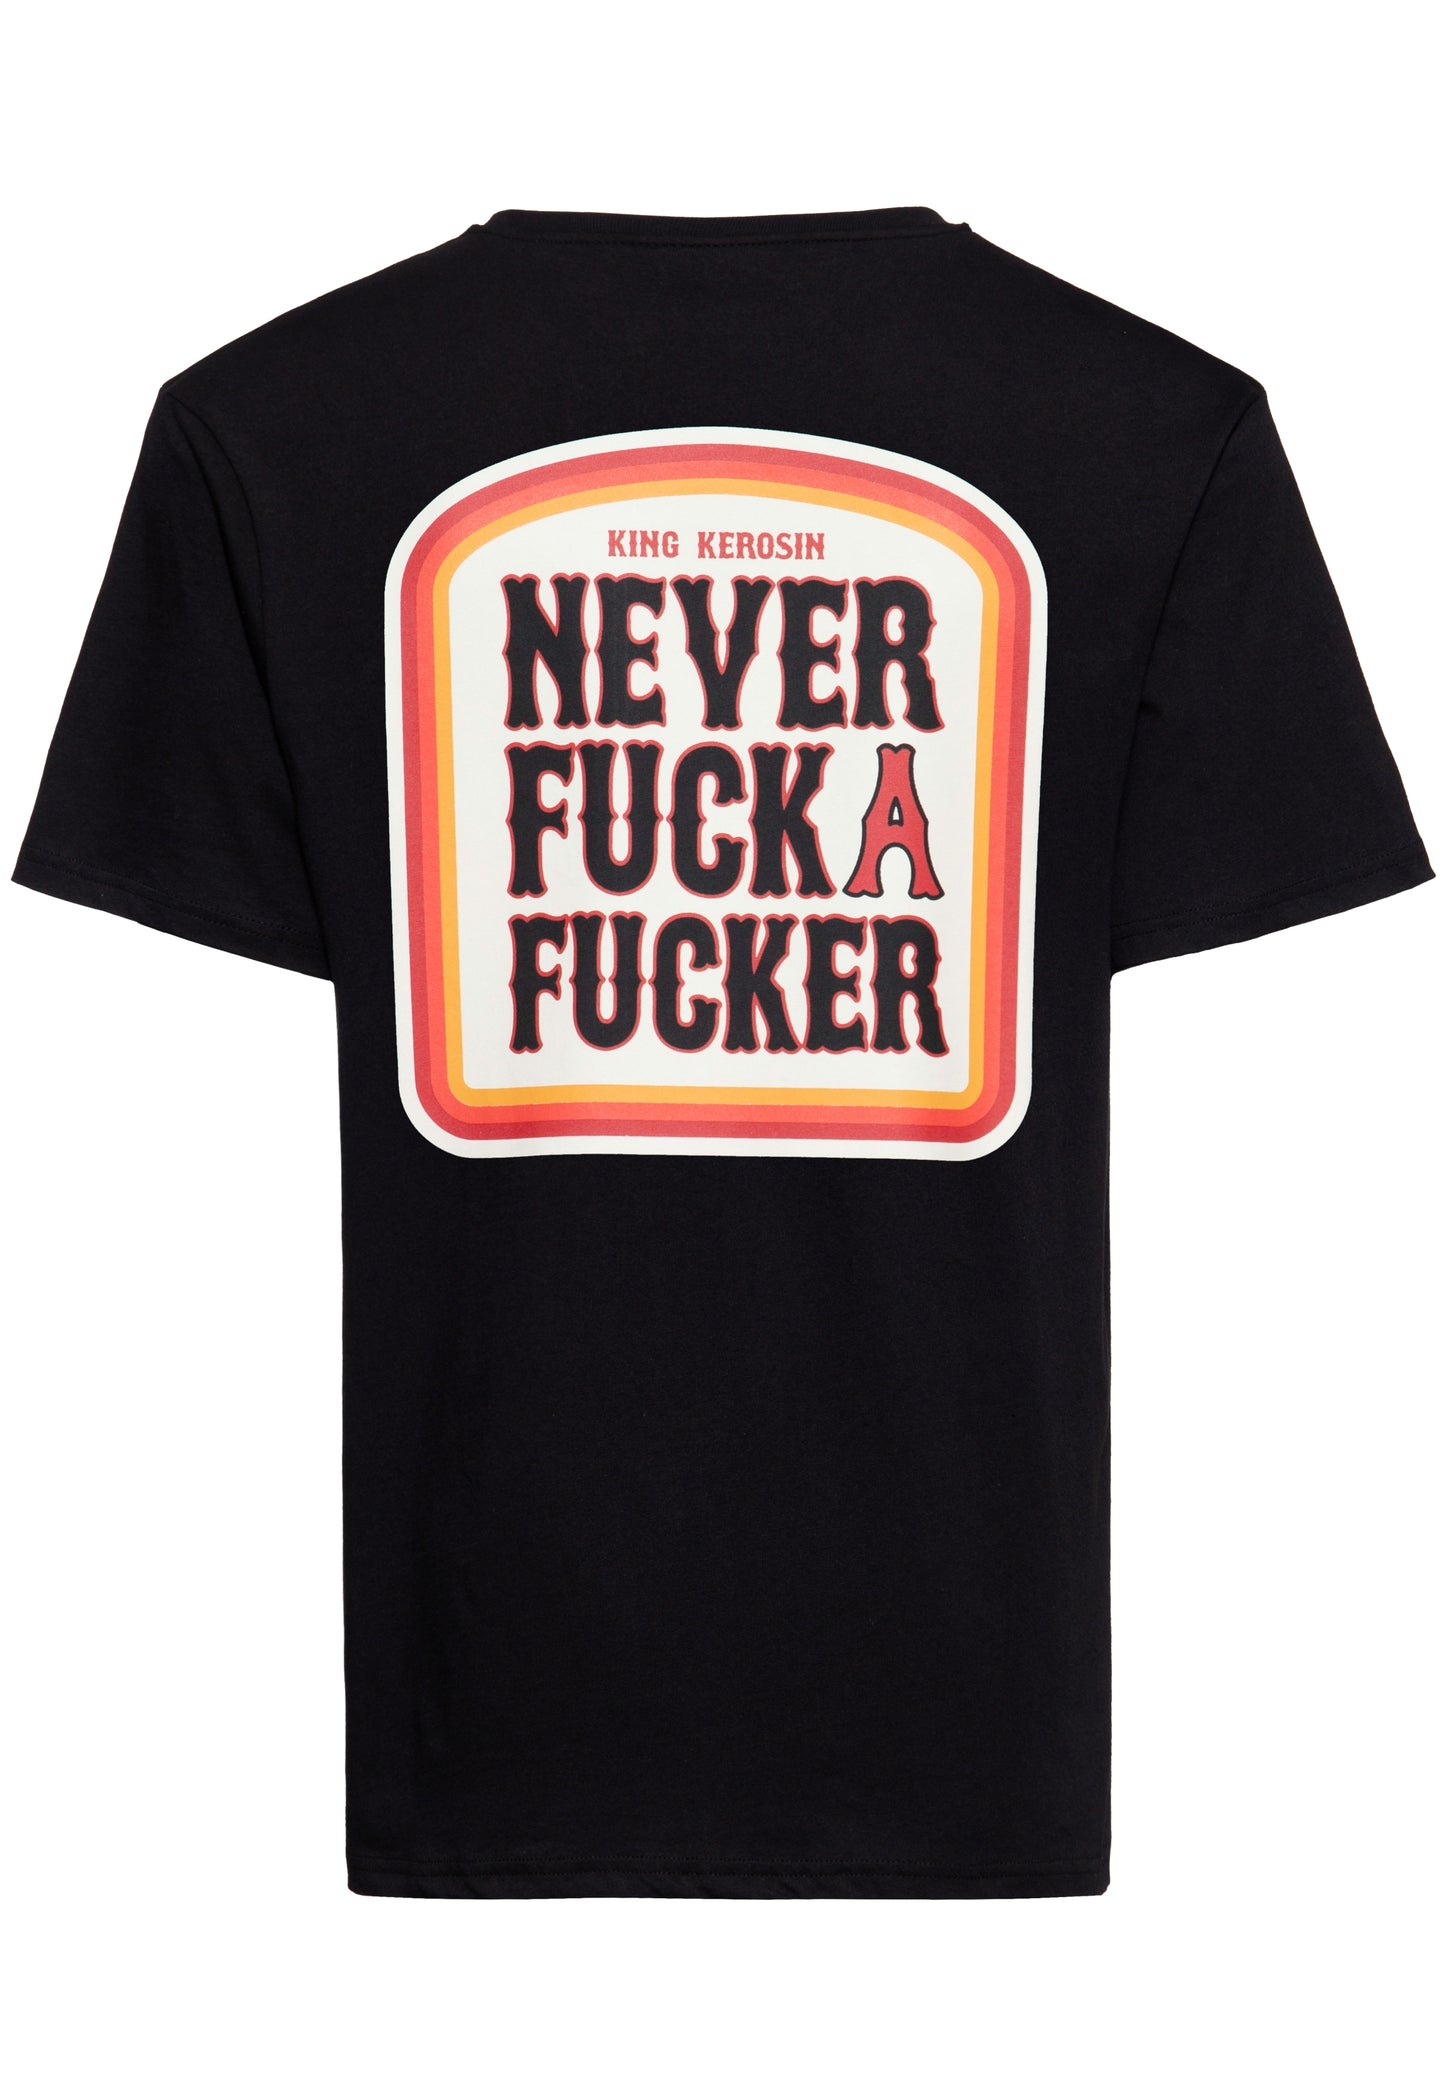 T-Shirt "Never Fuck a Fucker" black 98% Baumwolle/2% Elasthan